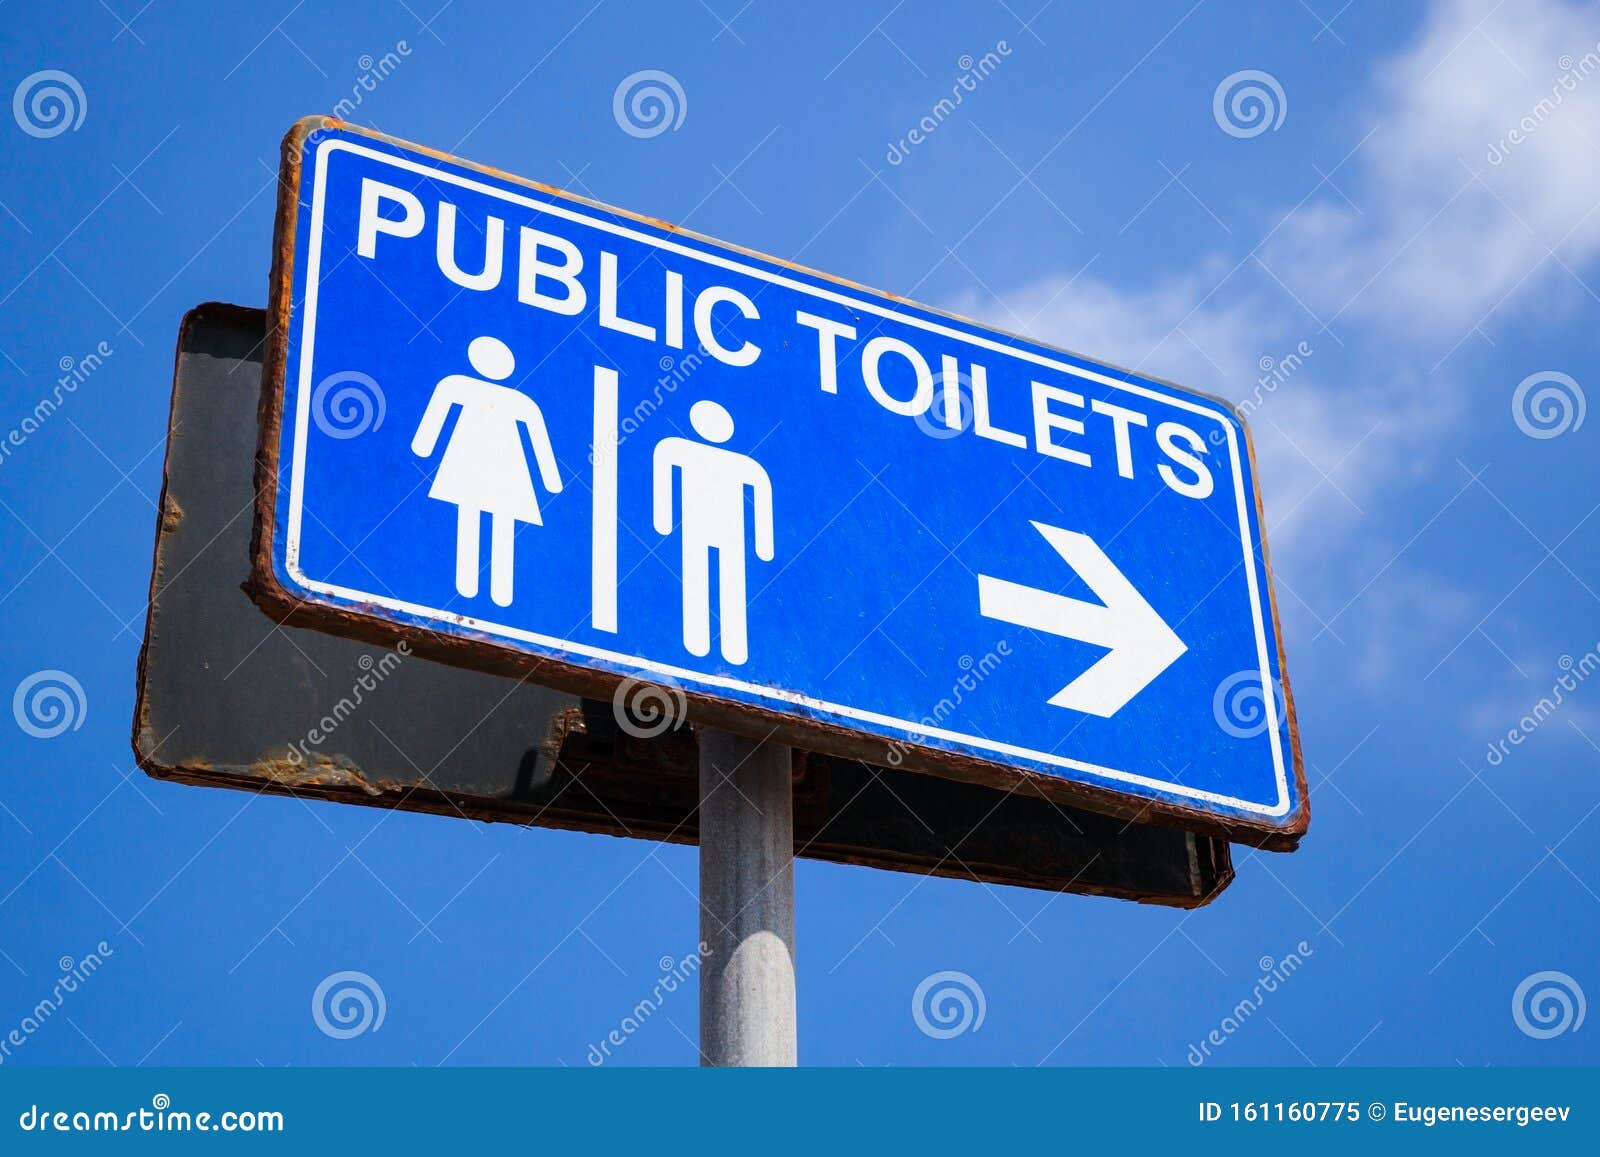 public-toilets-outdoor-sign-blue-board-under-cloudy-sky-161160775.jpg